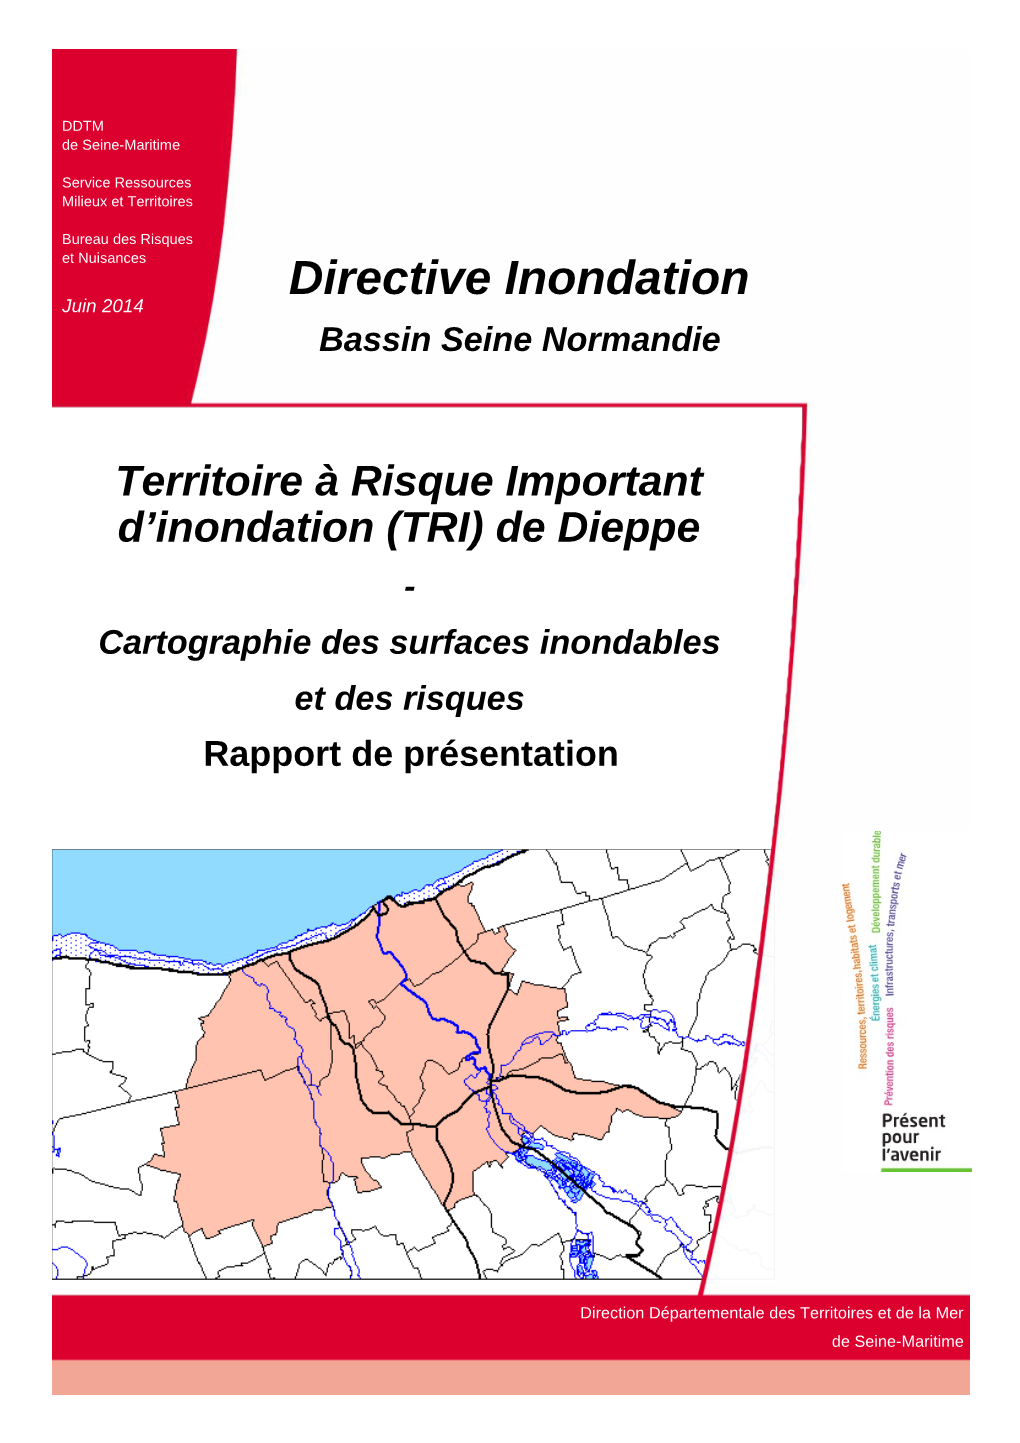 Directive Inondation Juin 2014 Bassin Seine Normandie